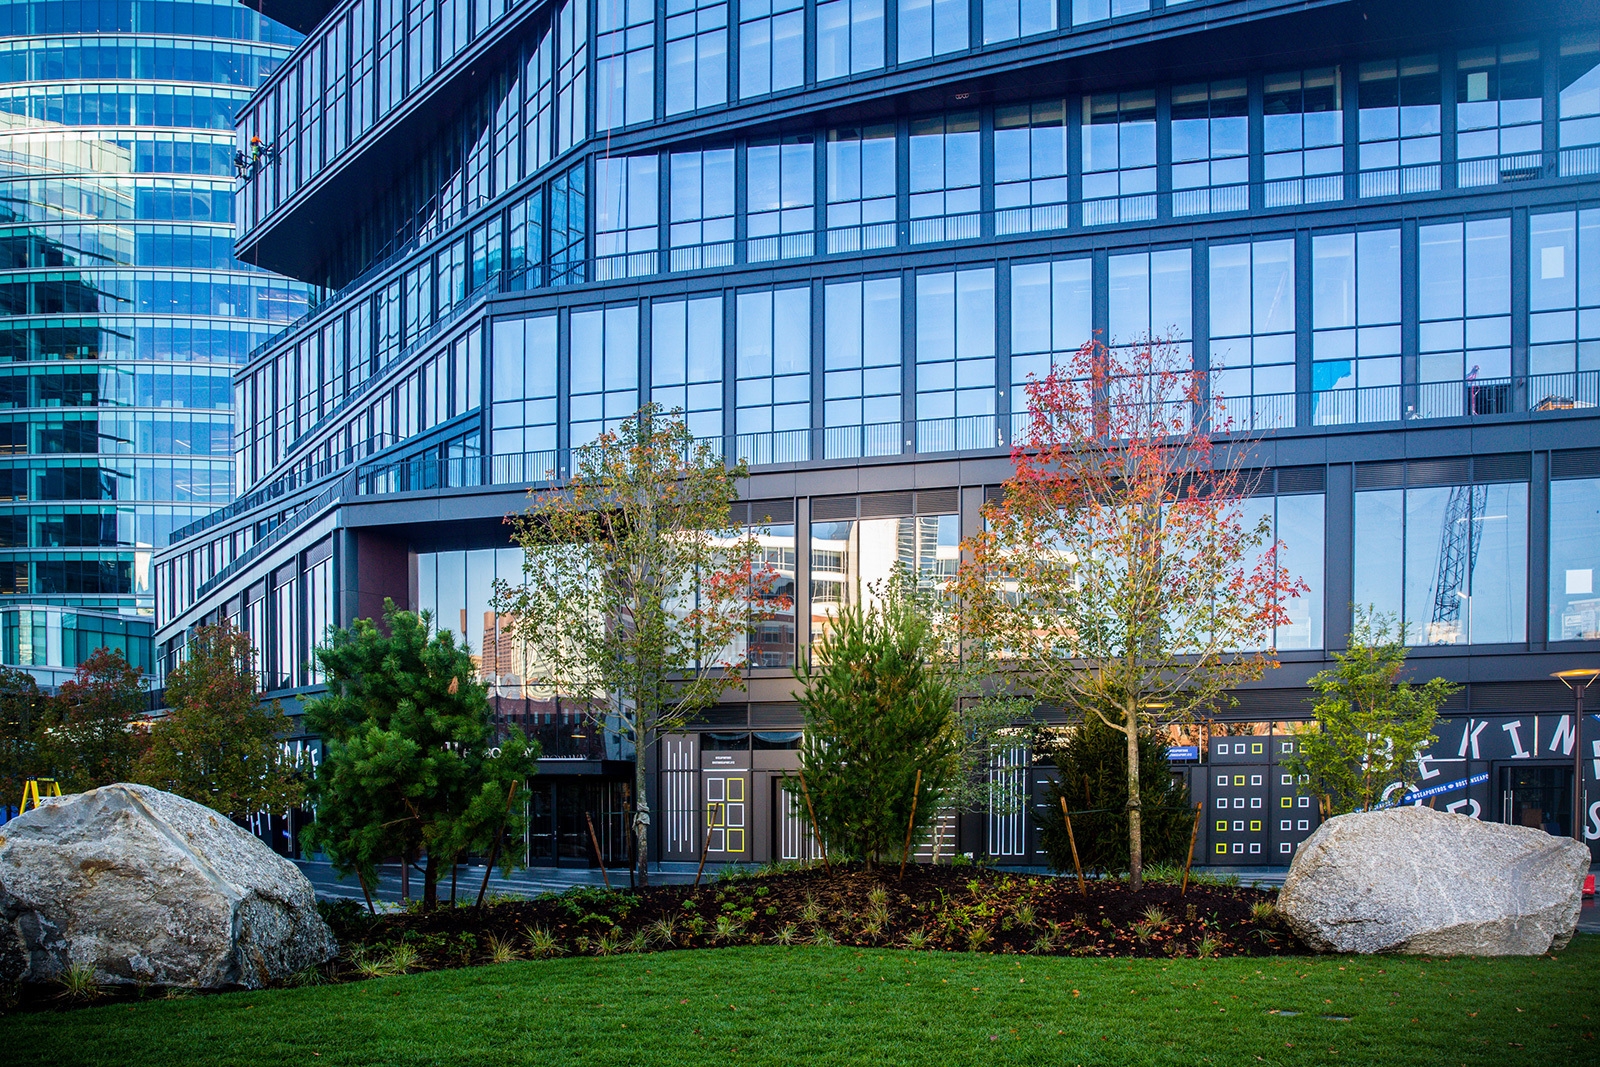 An image of the Amazon office building in Boston, Massachusetts